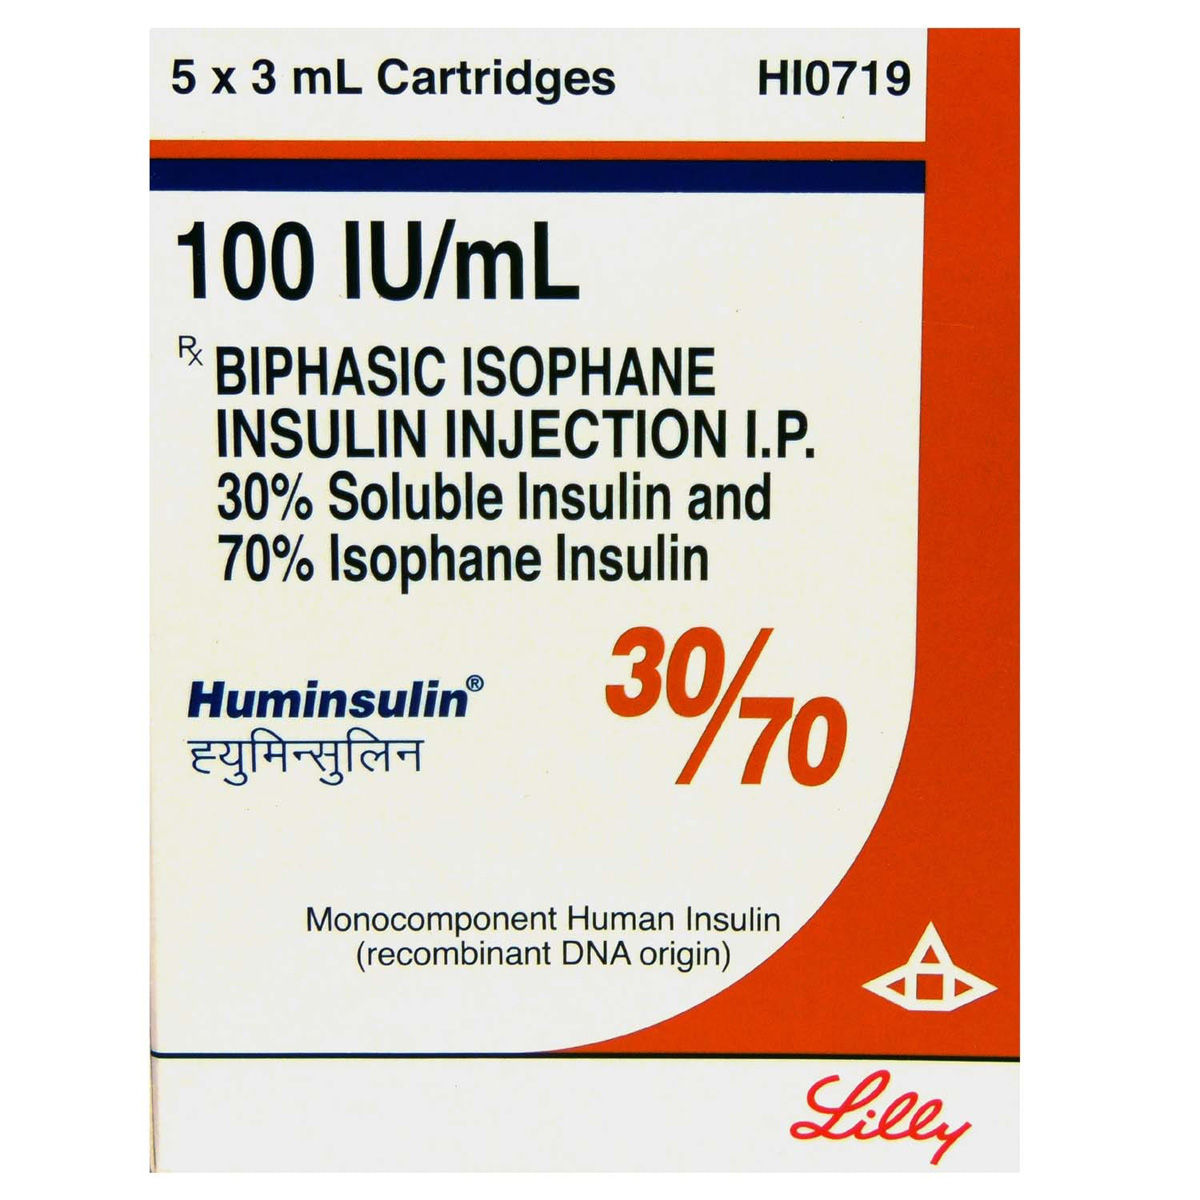 Buy Huminsulin 30/70 100IU/ml Cartridge 5 x 3 ml Online